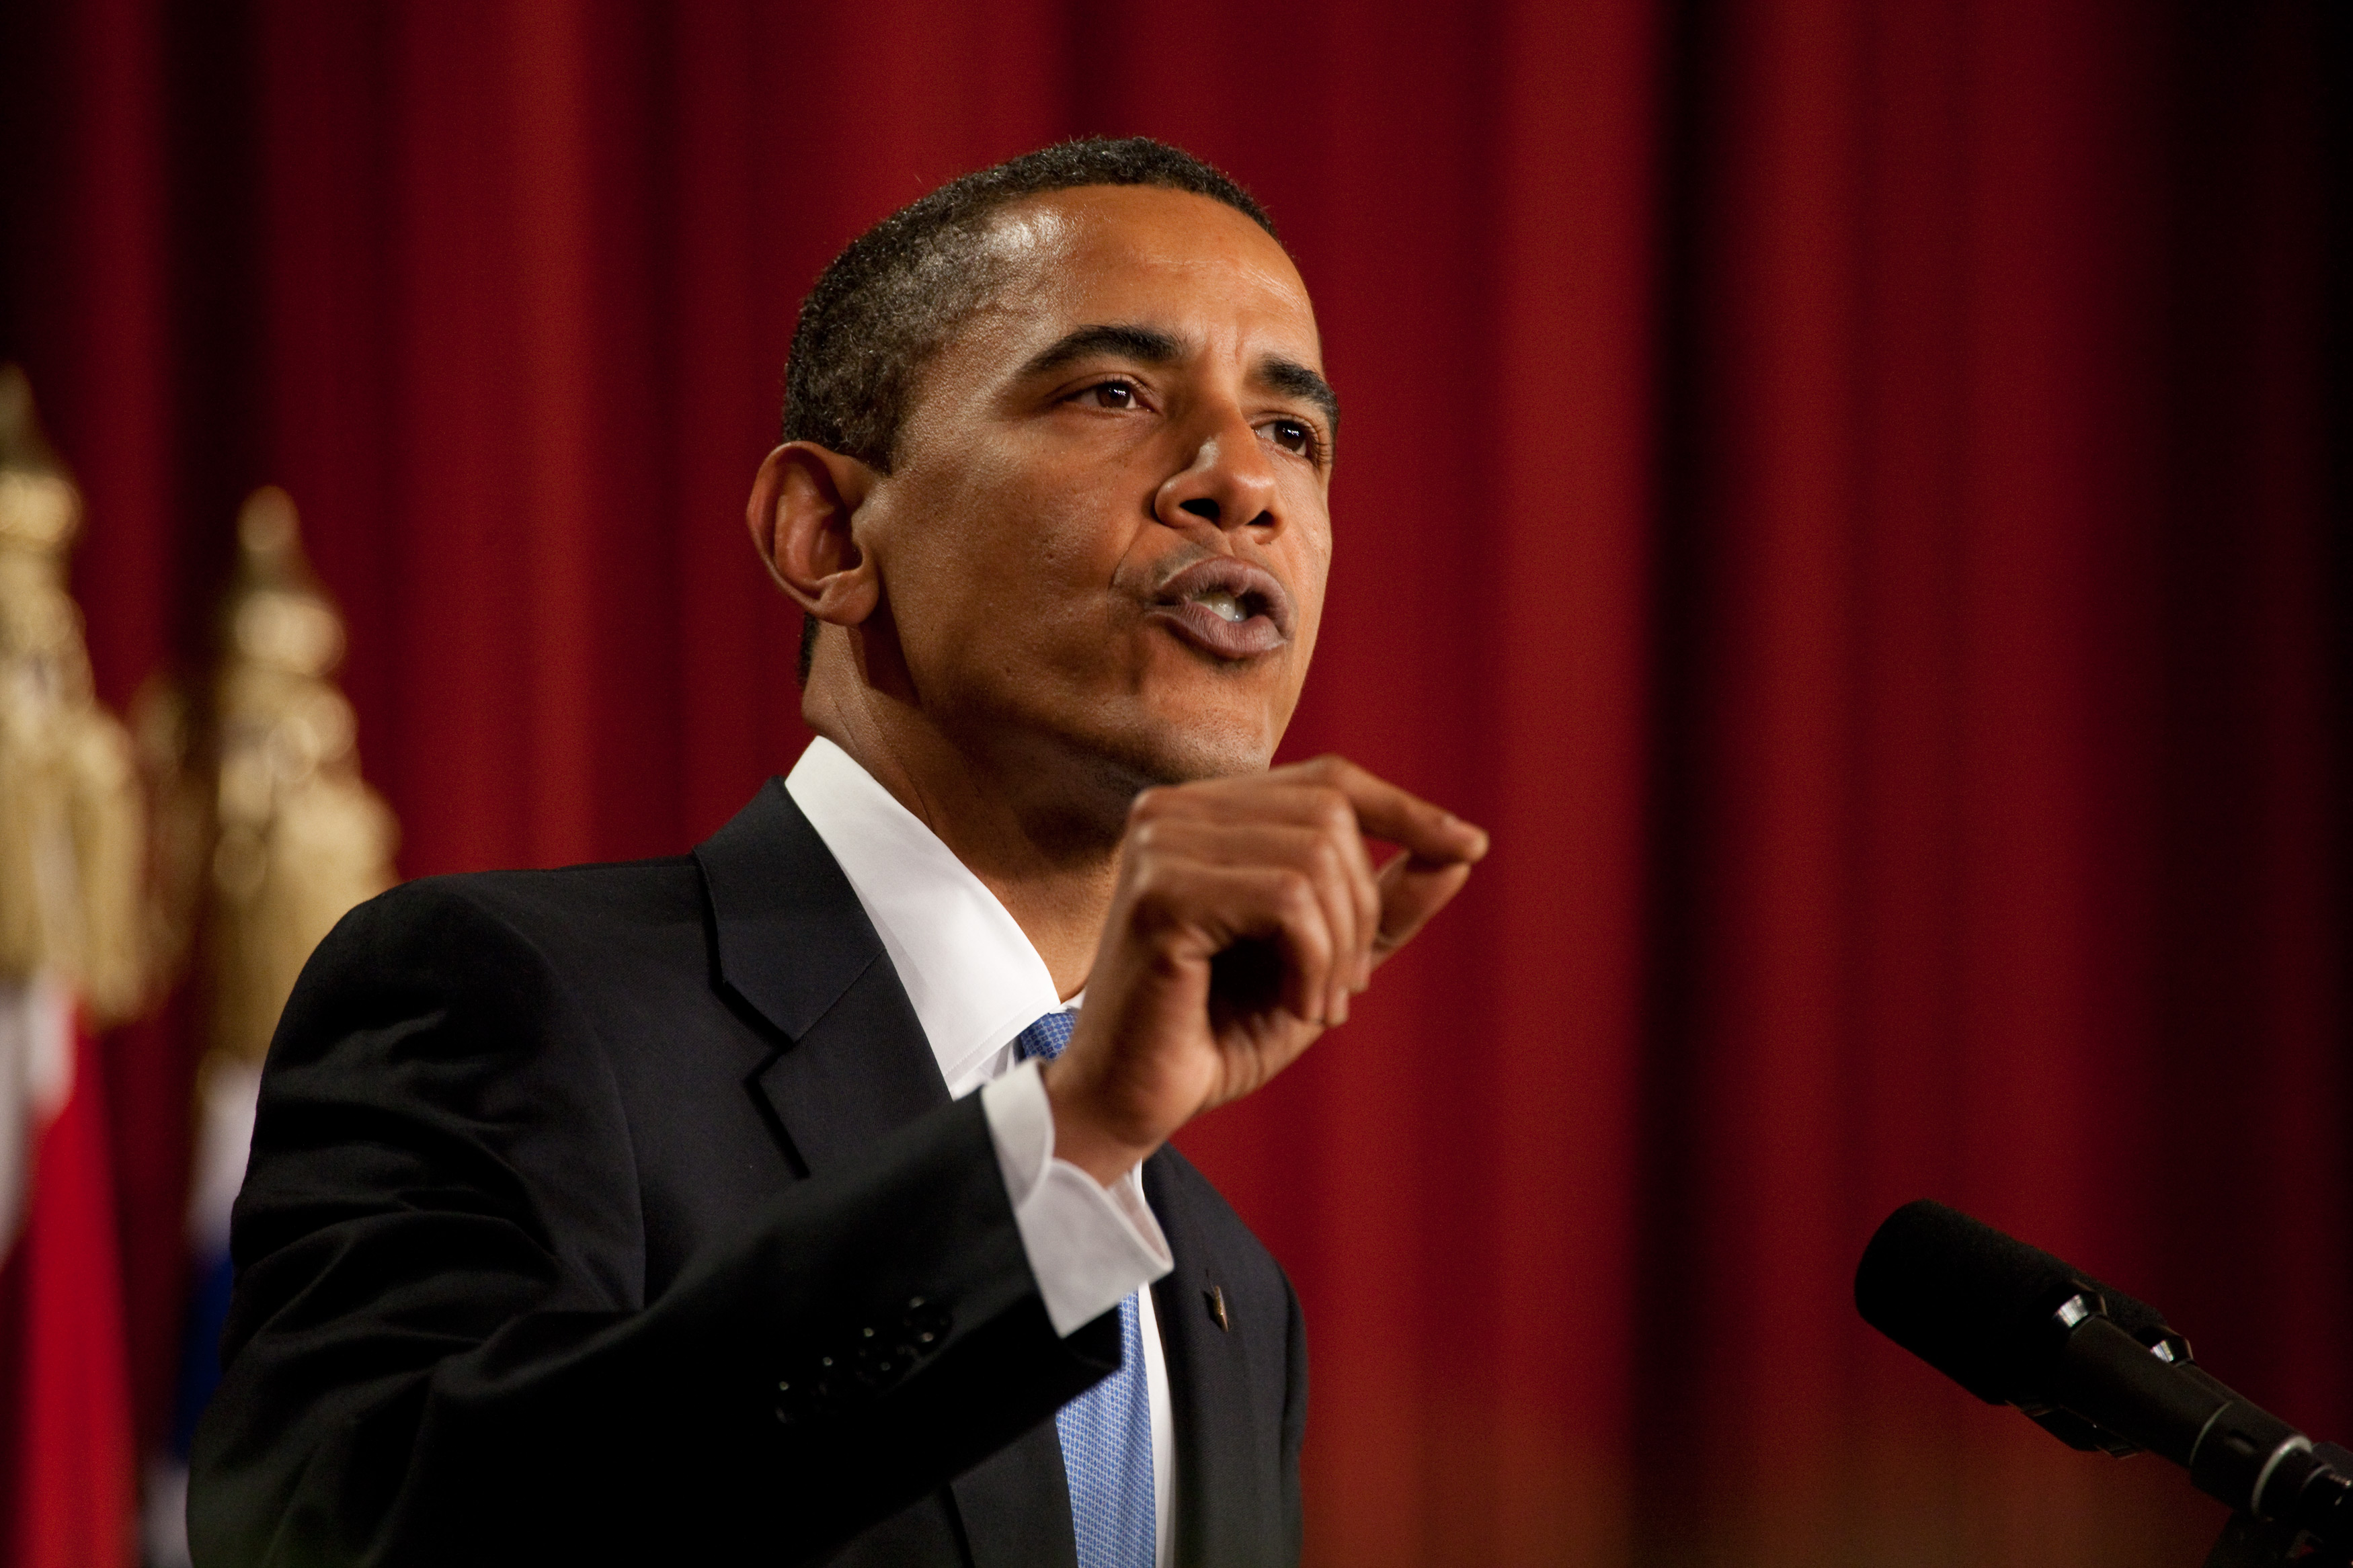 File:Barack Obama speaks in Cairo, Egypt 06-04-09.jpg - Wikipedia, the ...